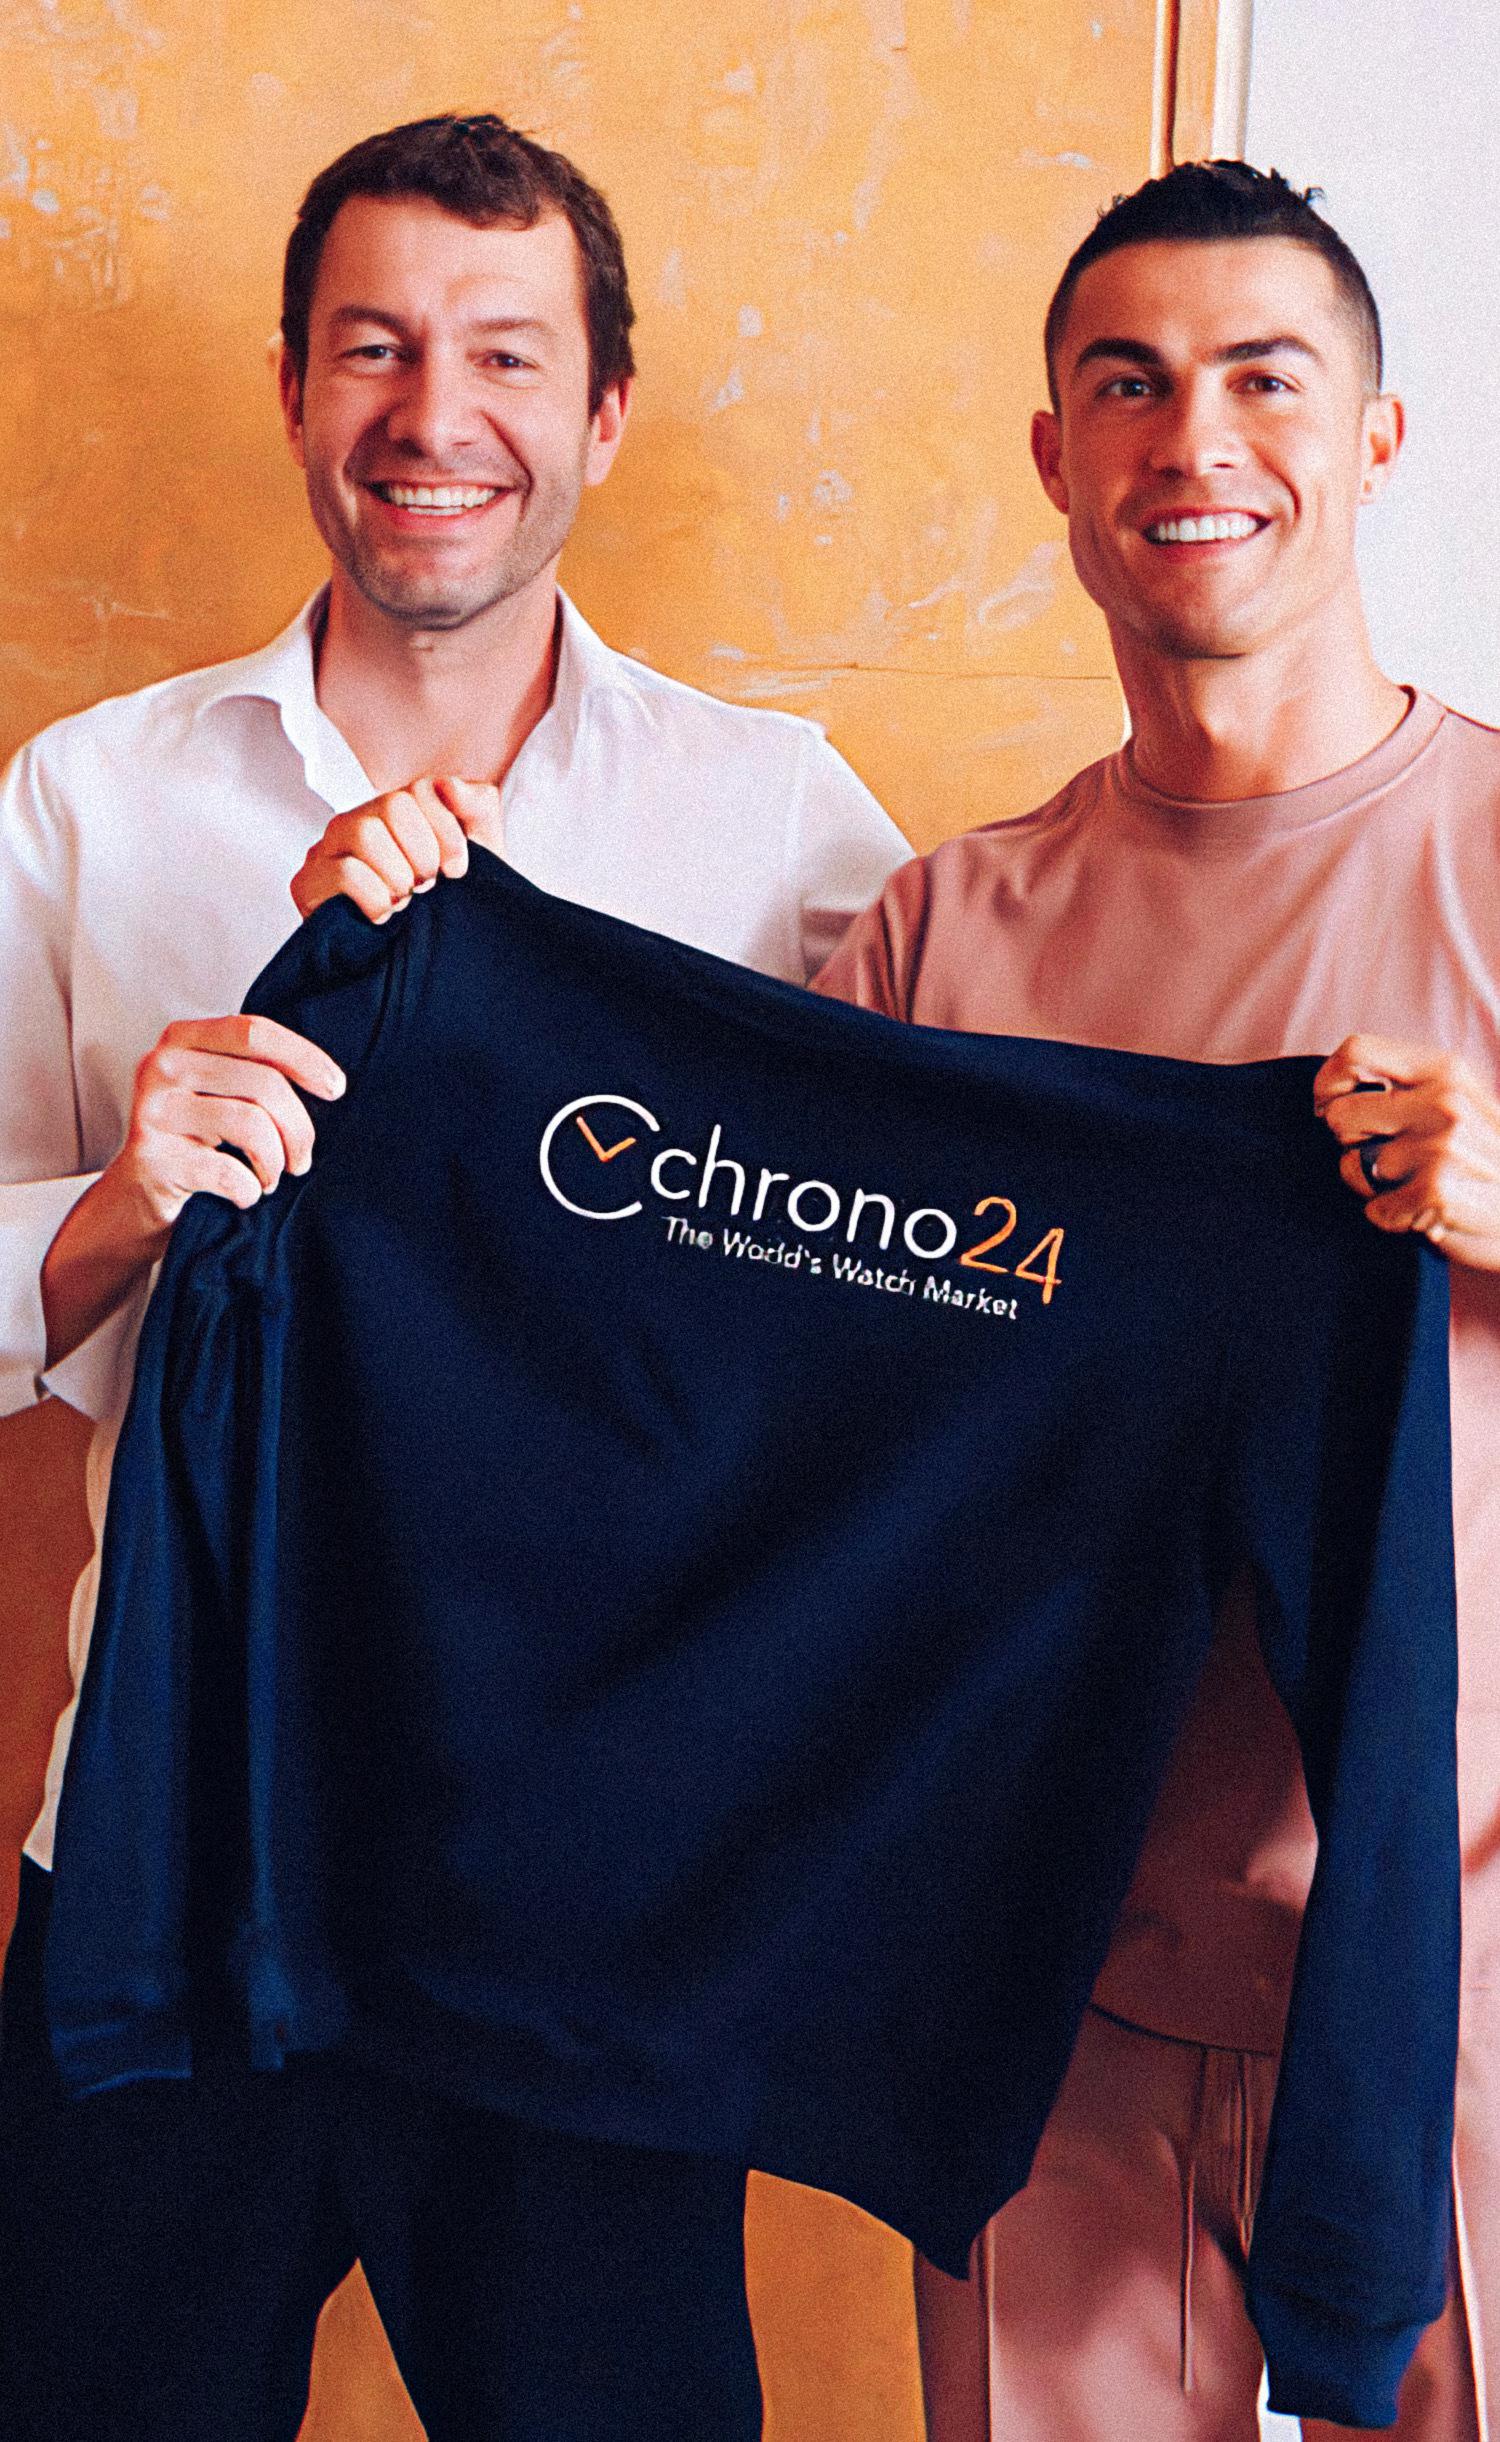 #C罗入股奢侈购售平台# C罗快拍更新加入Chrono24平台成为新股东之一。平(1)